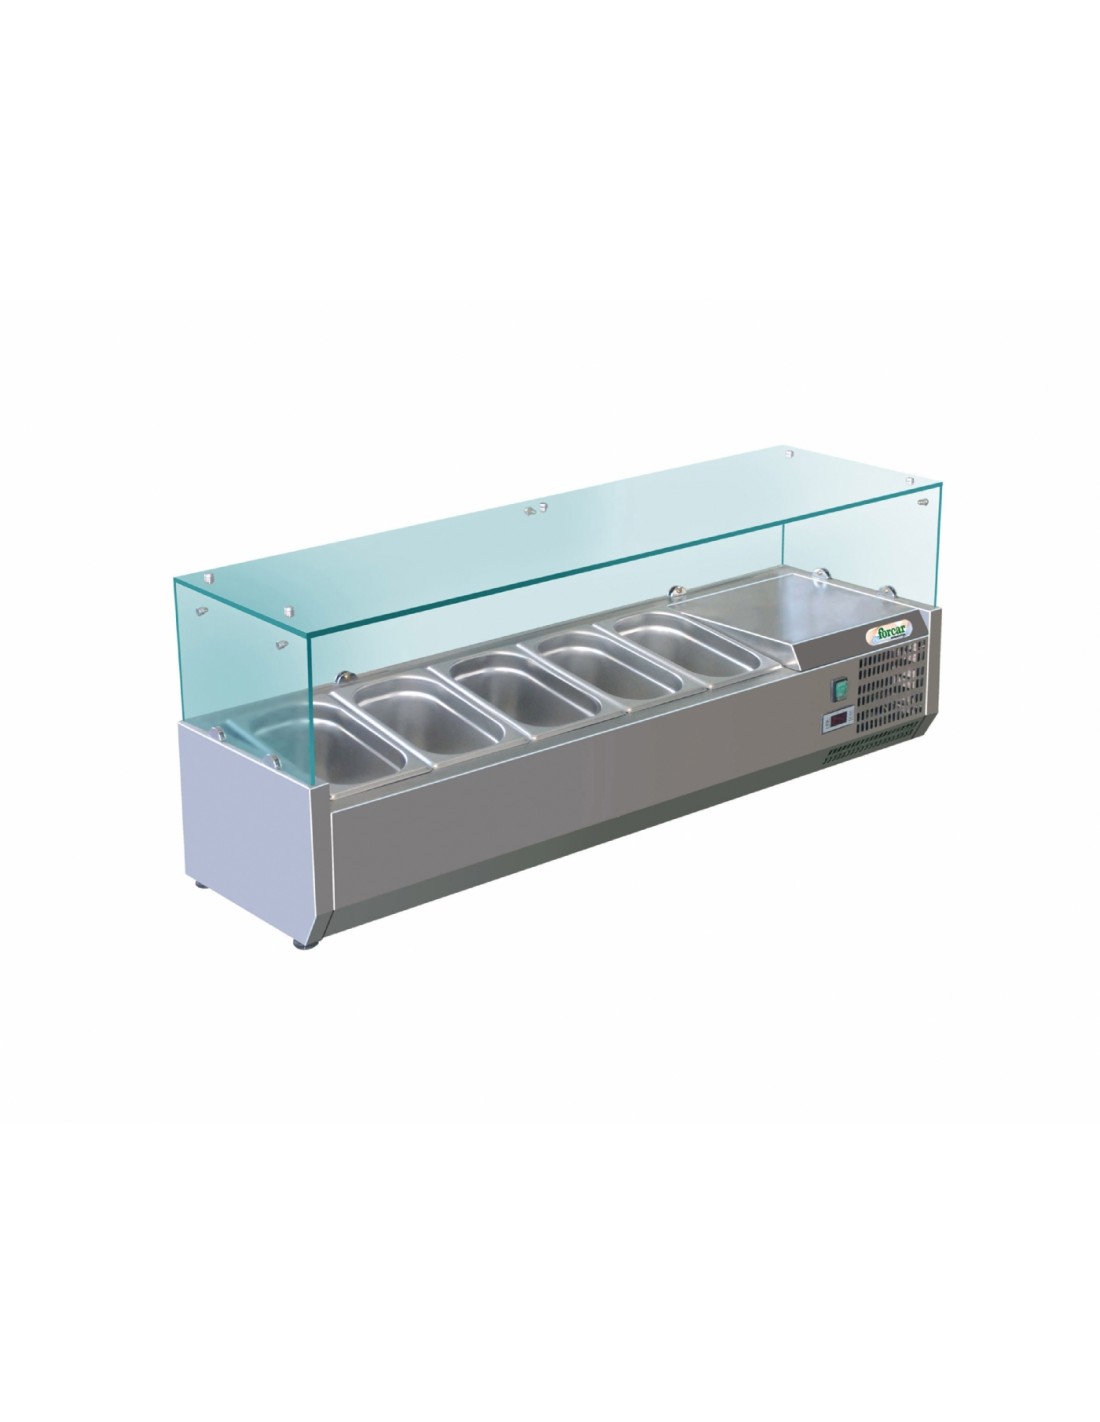 Refrigerated display case brings ingredients - Static - Capacity 9 GN 1/3 - cm 44.5h